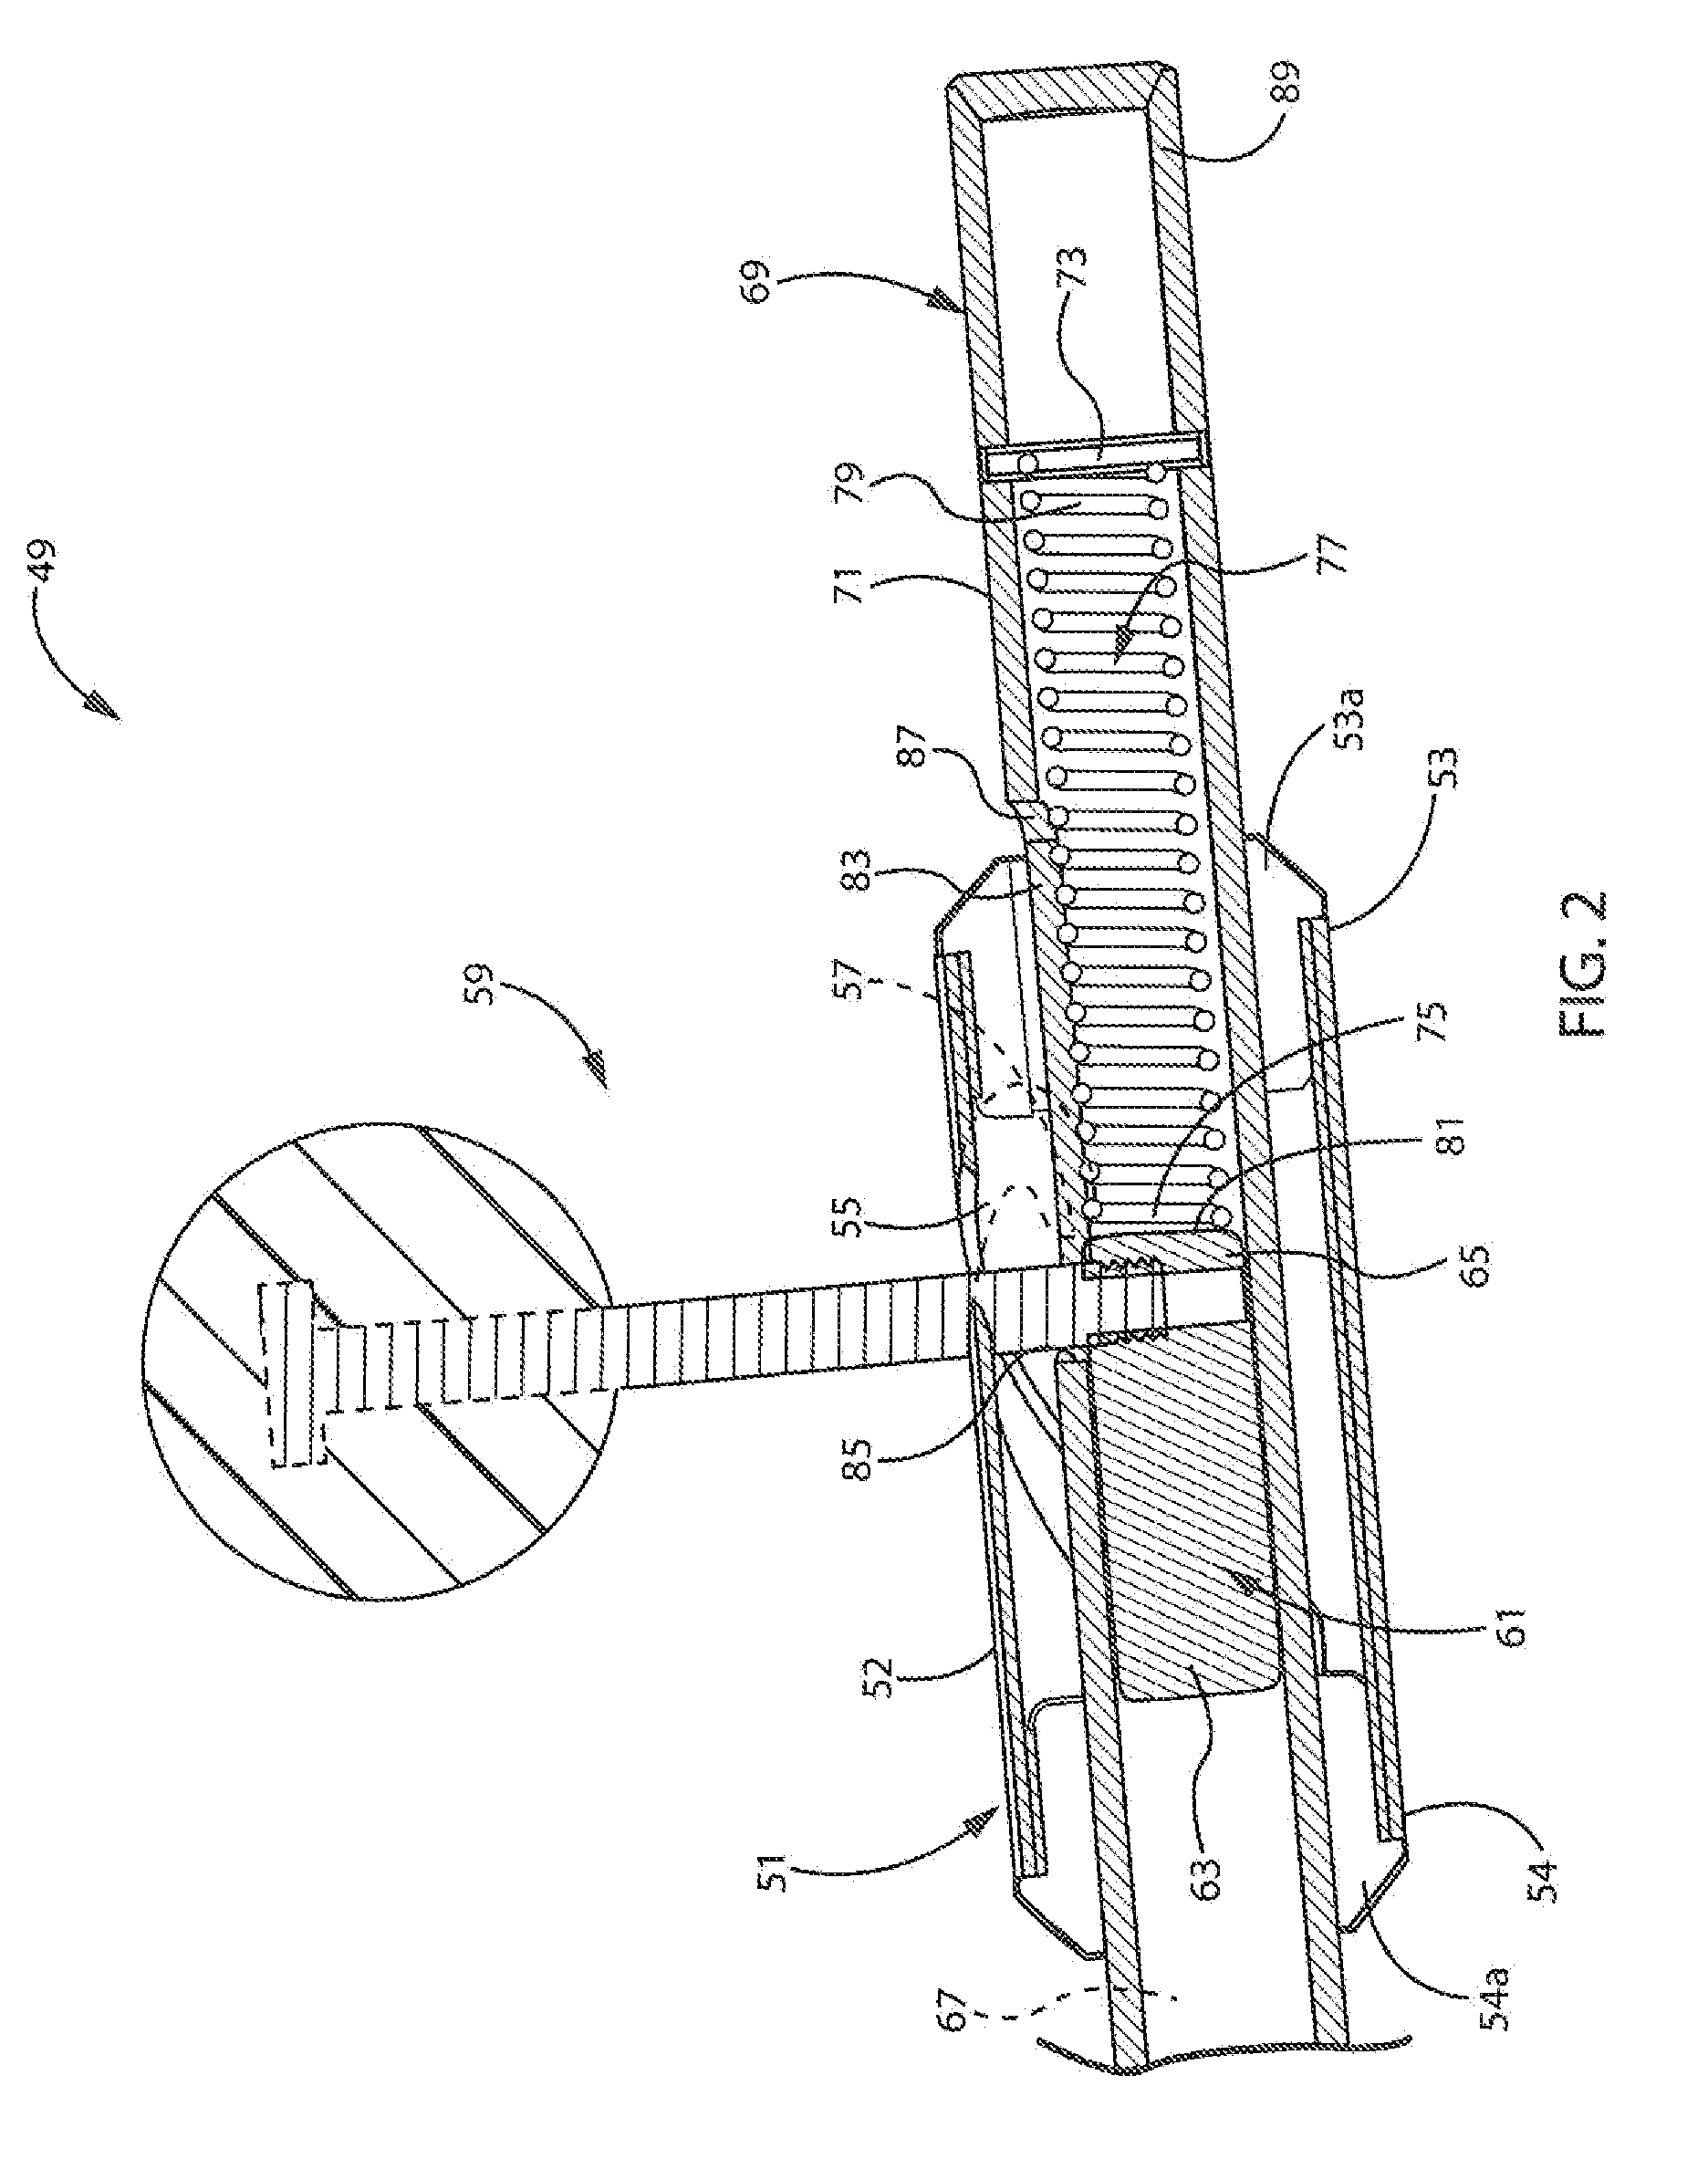 Self-adjusting skewer clamp for a bicycle trainer